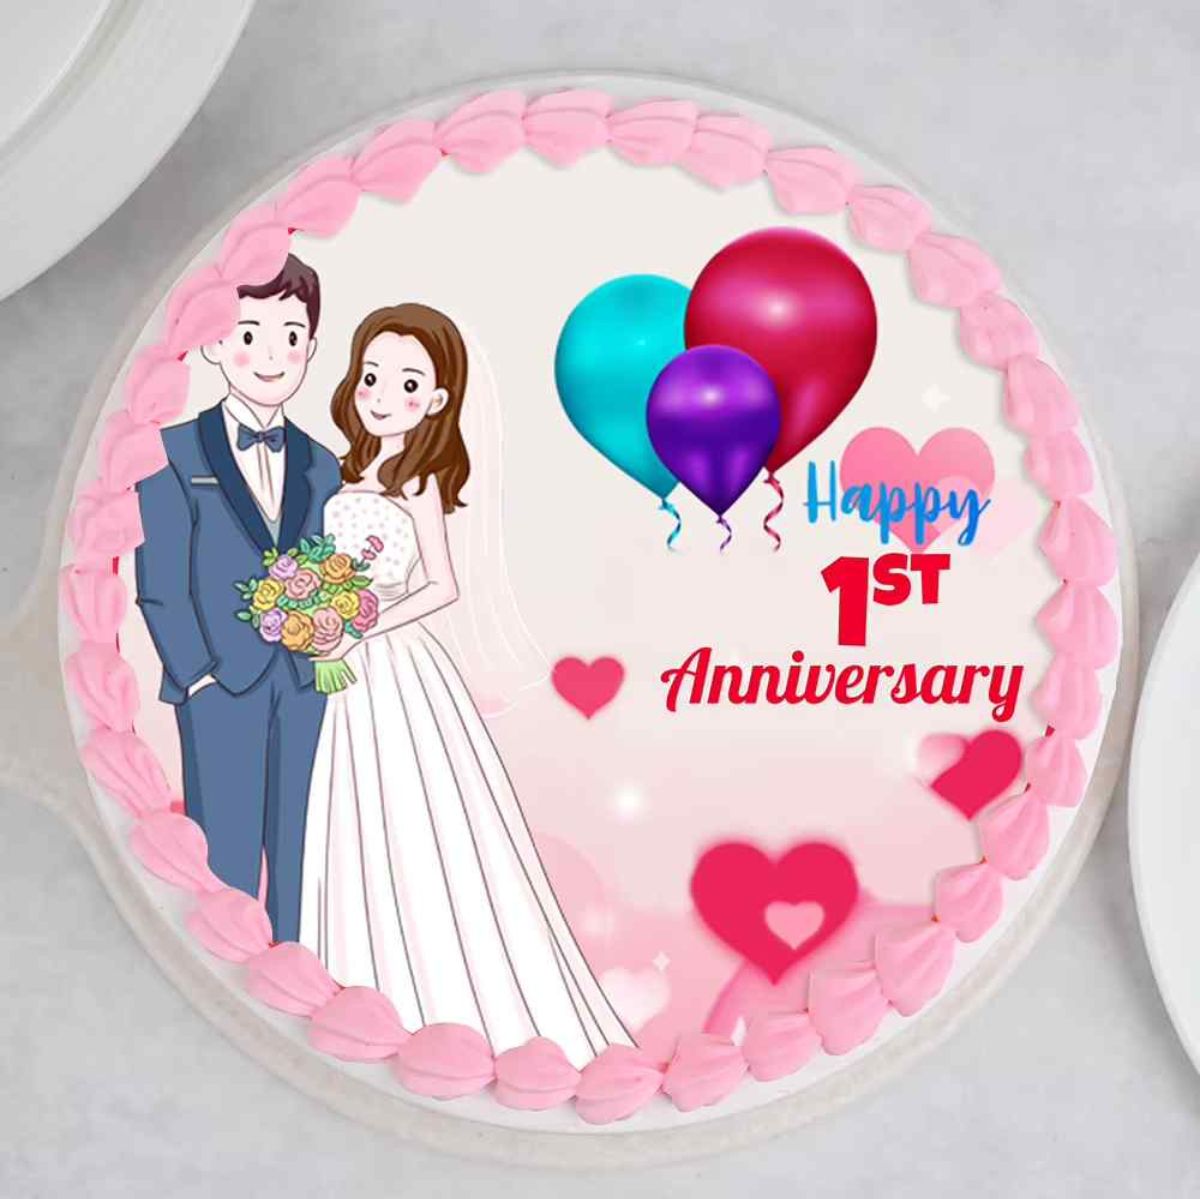 7 Wedding Anniversary Cake Designs - Bakingo Blog-thanhphatduhoc.com.vn